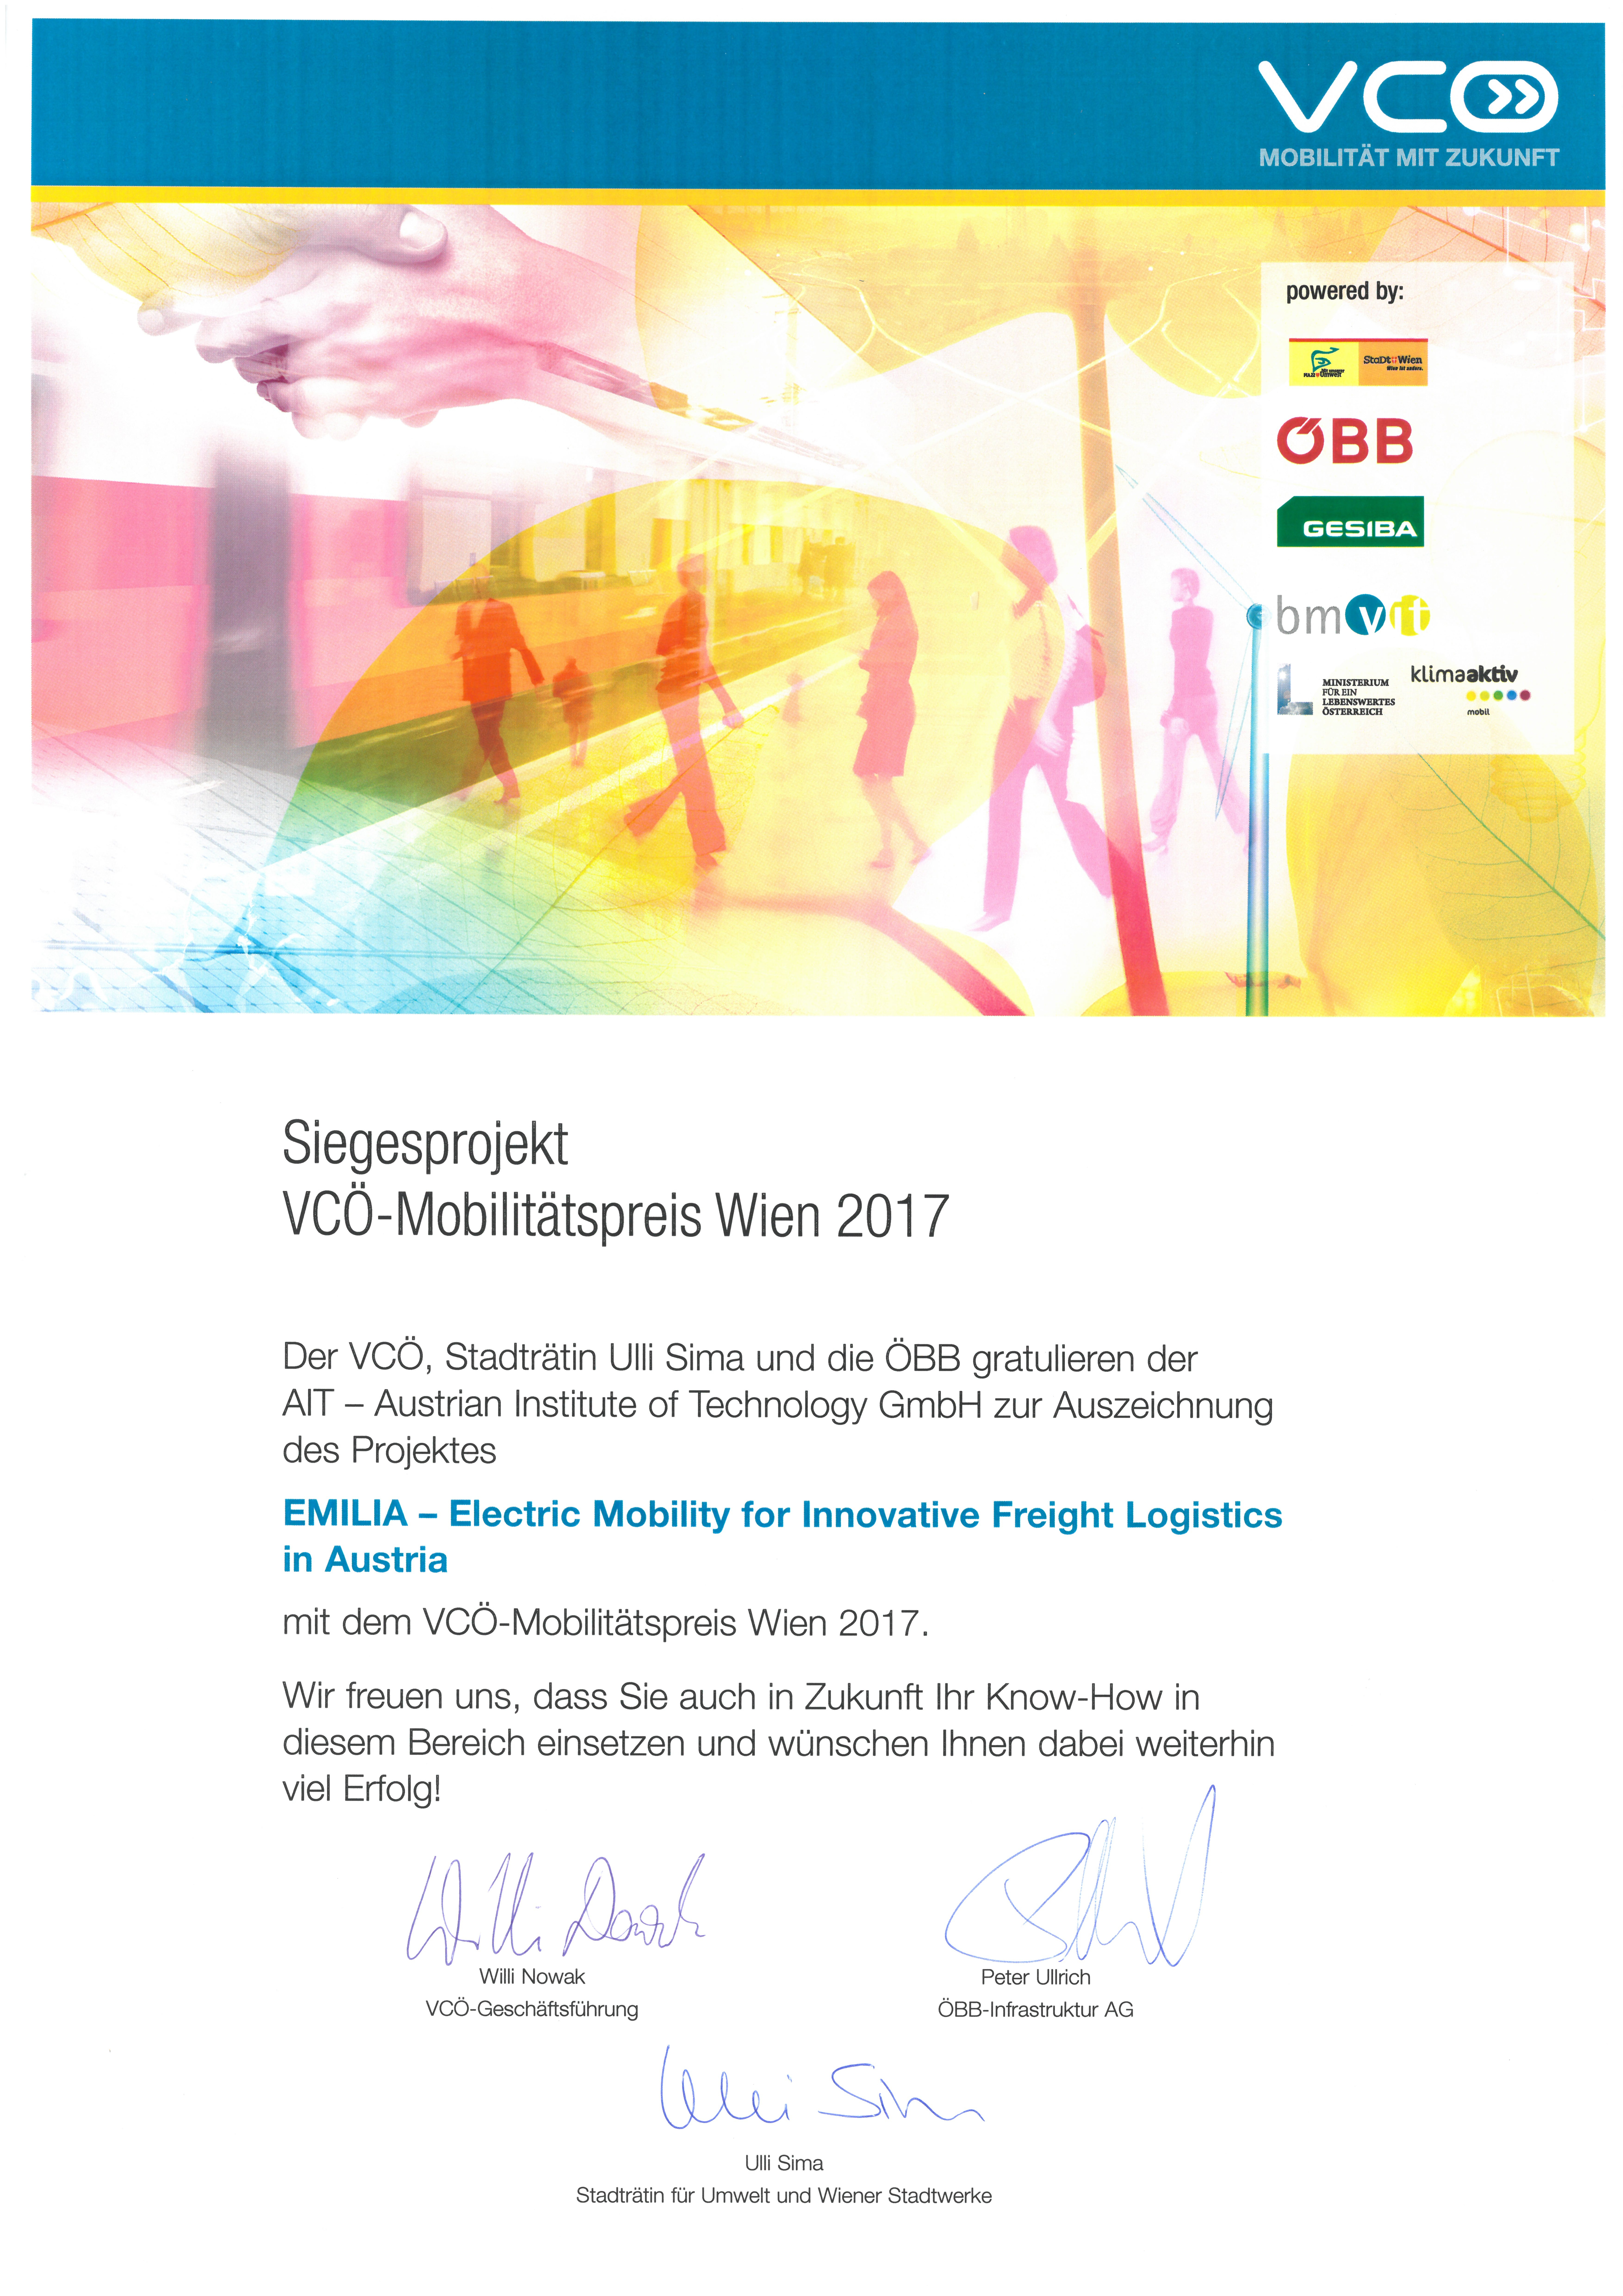 VCÖ award